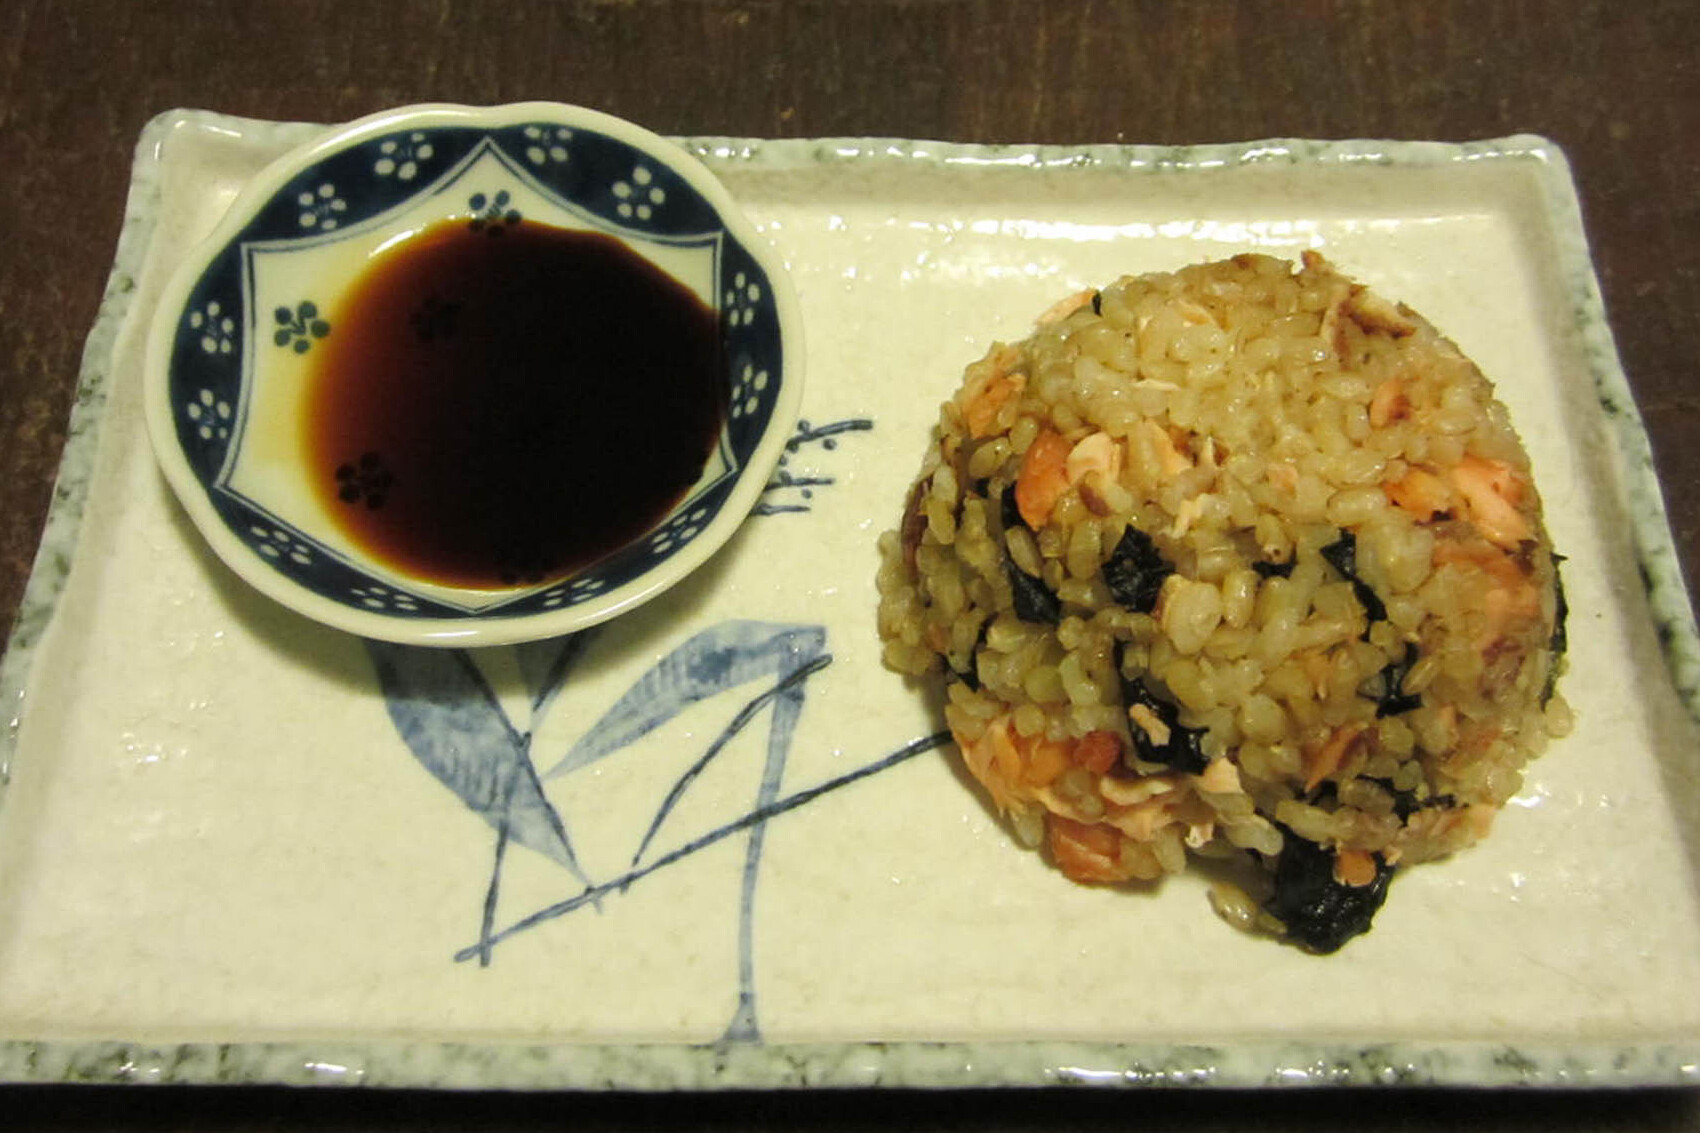 Japanese with salmon and a side of SAN-J Tamari